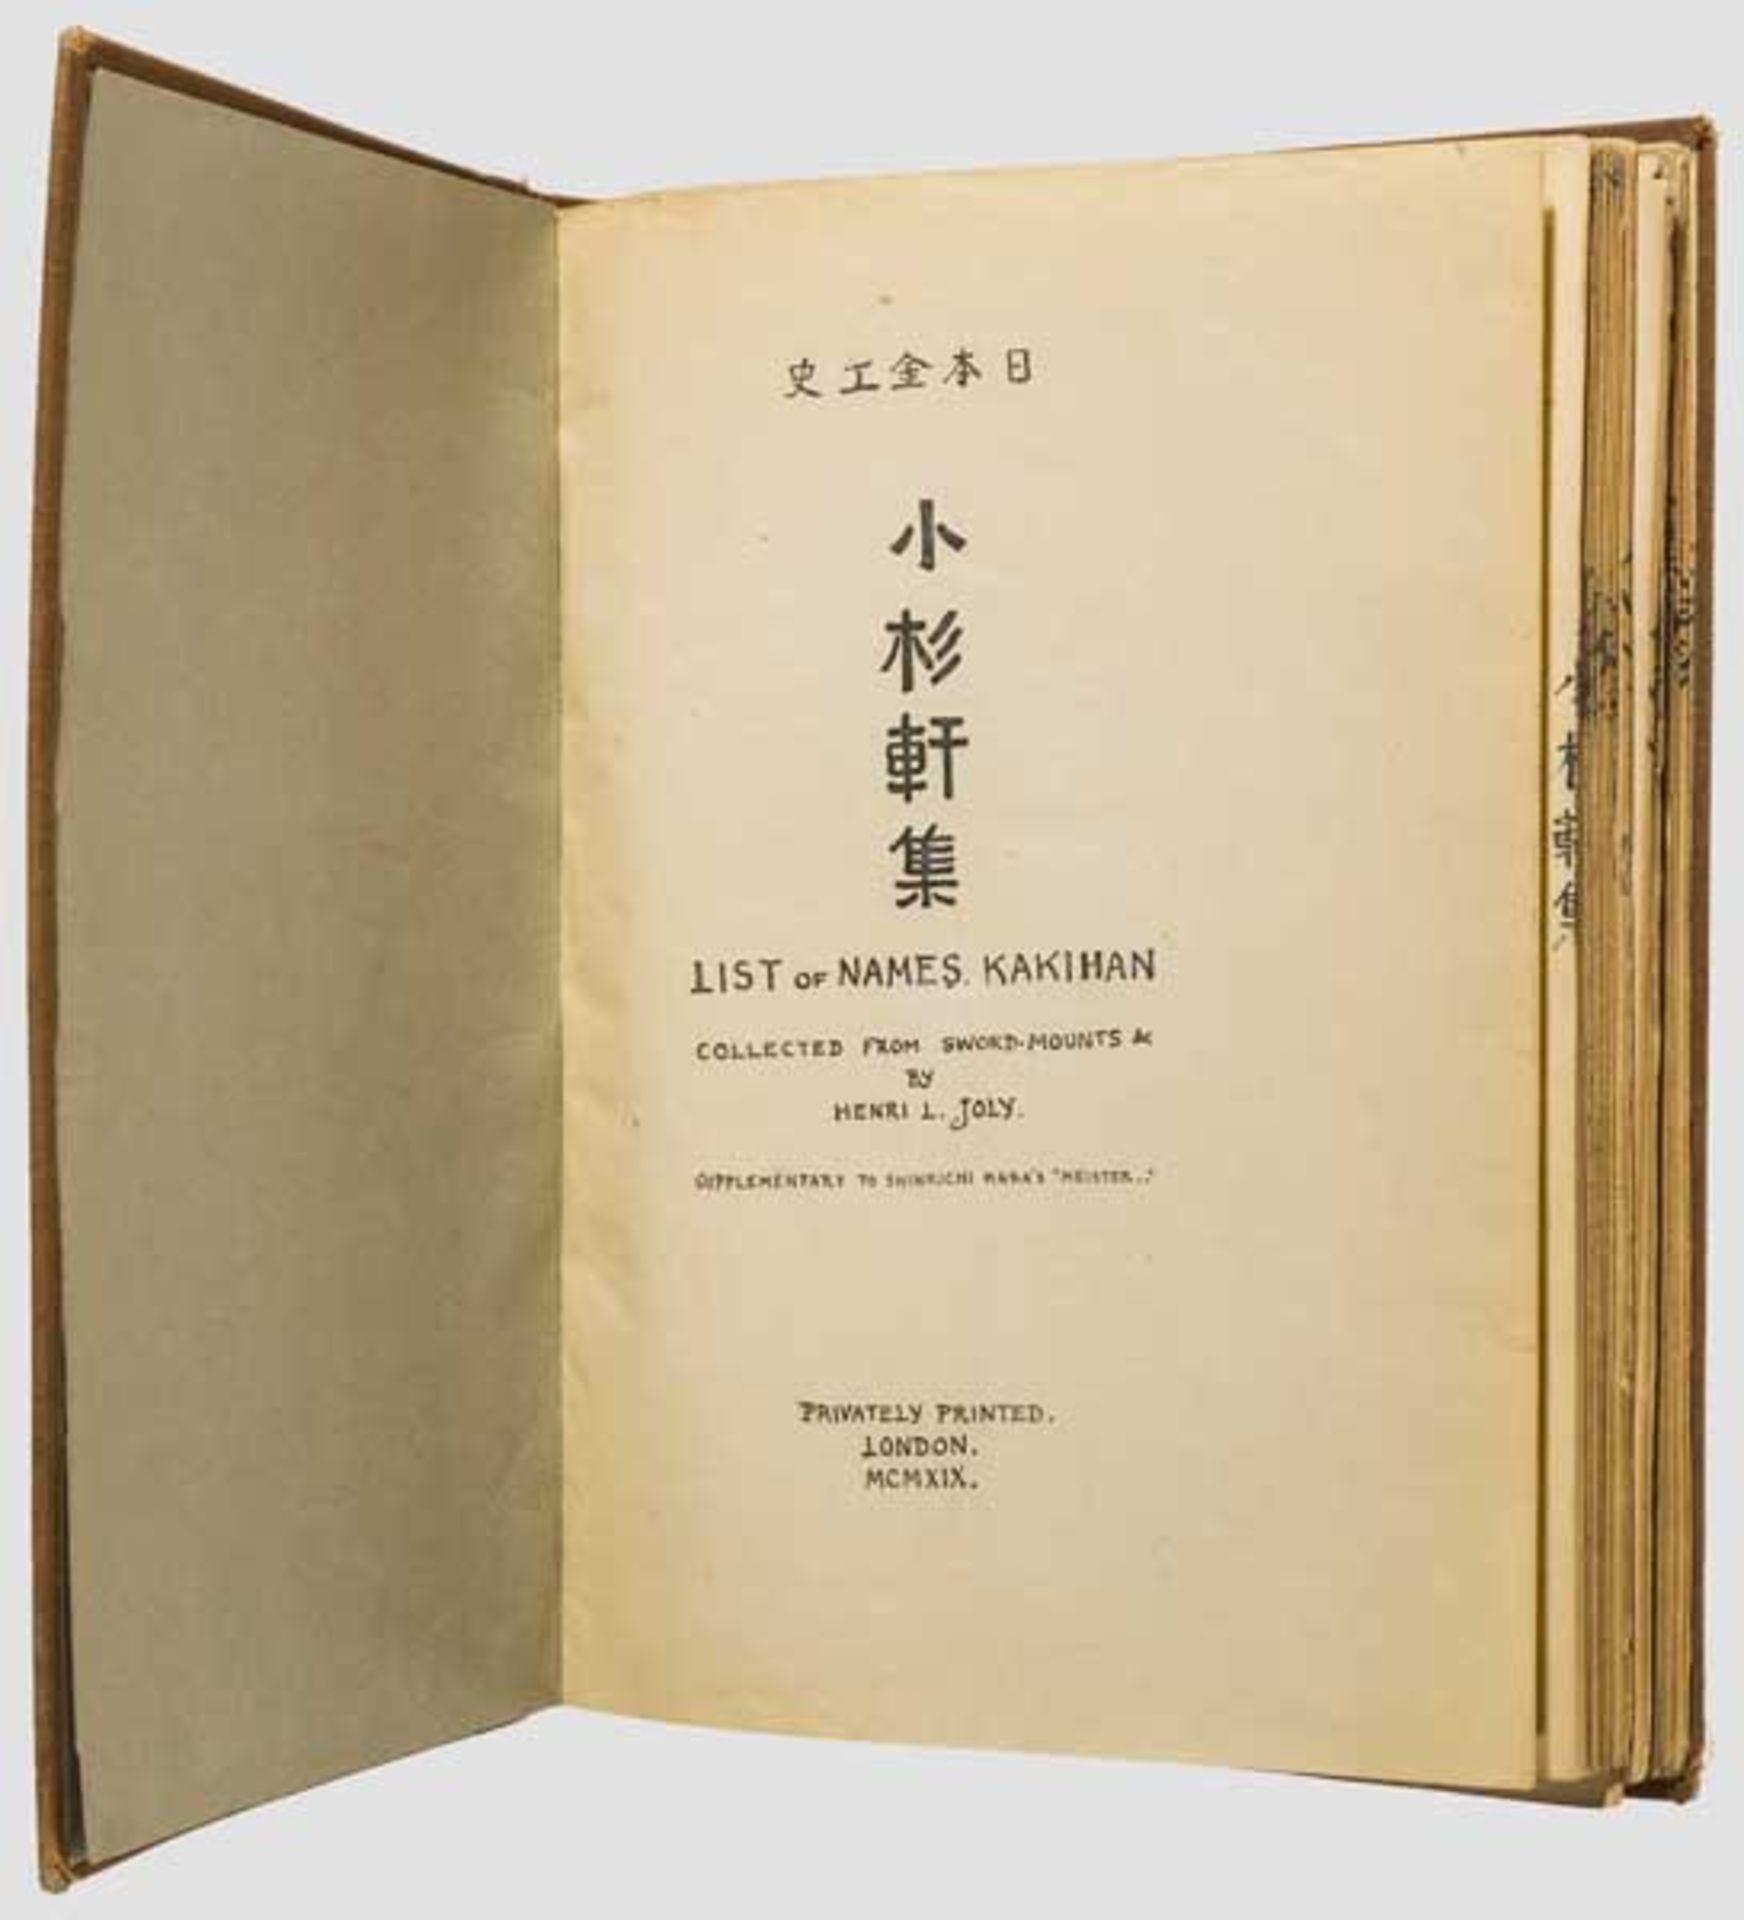 Henry L. Joly, Shosankenschu 1500 - 1880 List of Names Kakihan collected from Sword Mounts.